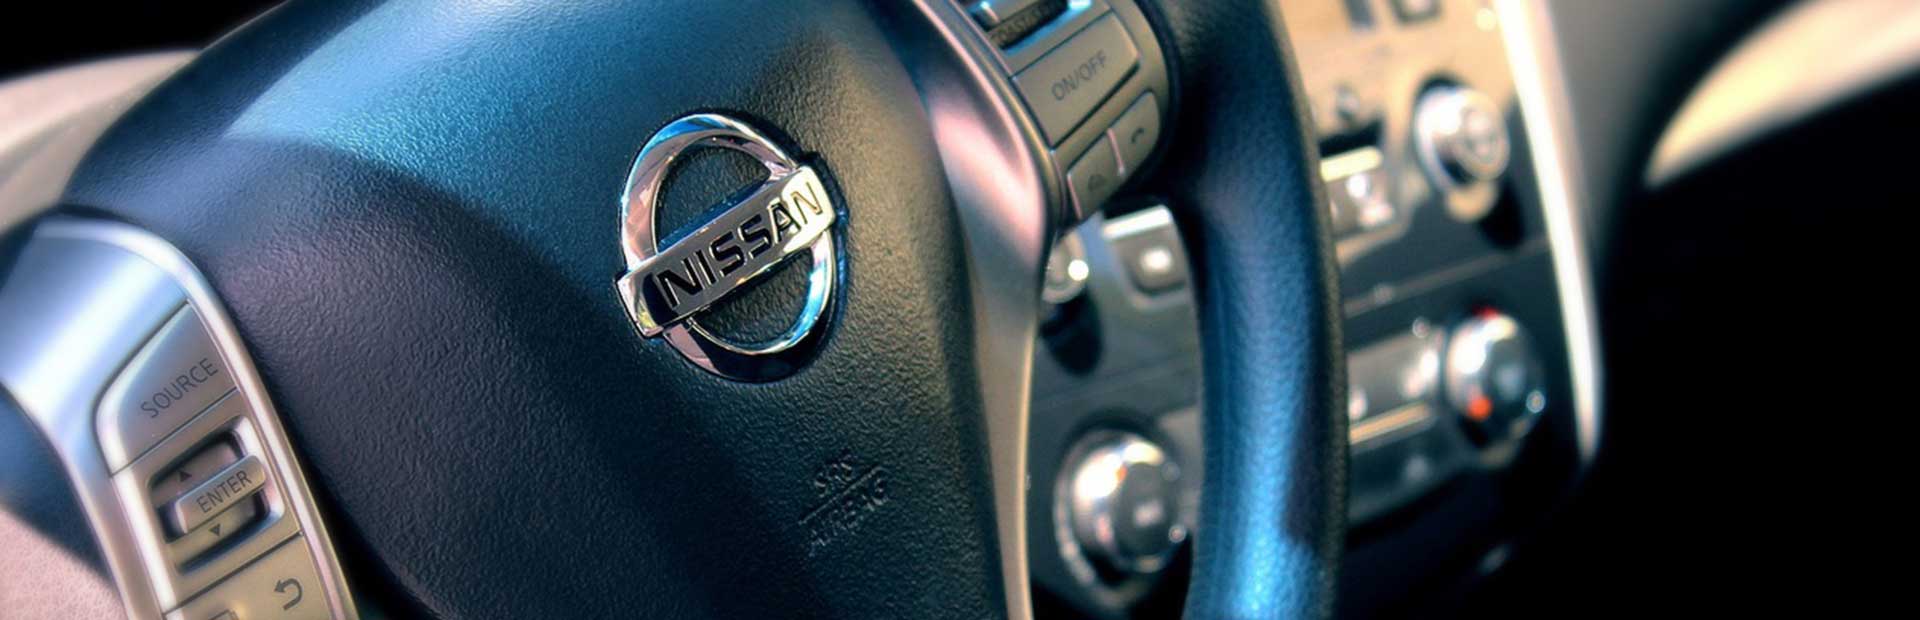 takata airbag settlement, product liability